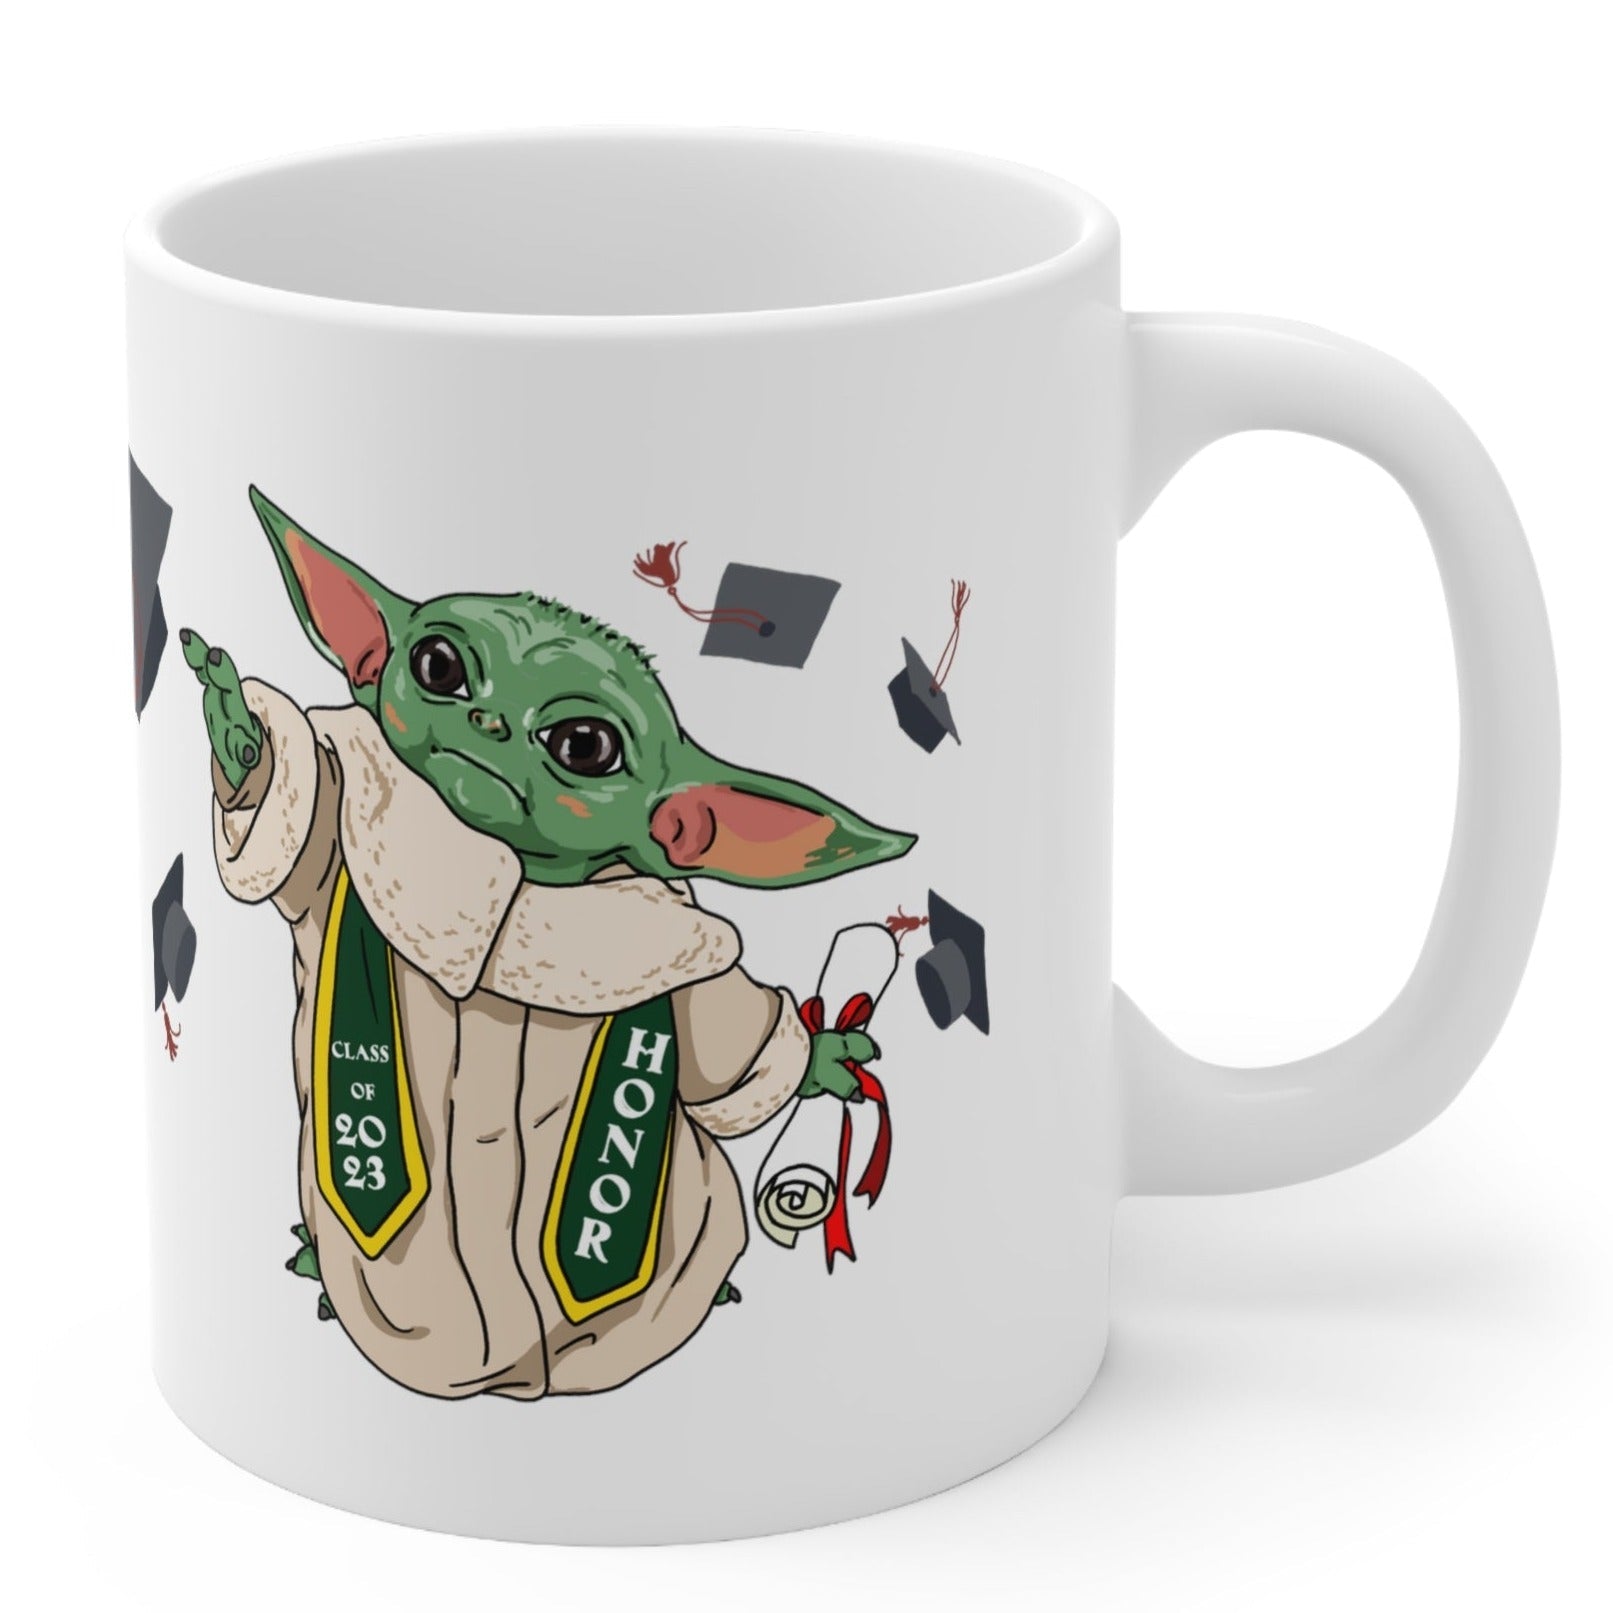 Baby Yoda Mug, Baby Yoda Coffee Mug, Baby Yoda One For Me Mug, Best Yoda  Gift, Funny Star Wars Mug, Yoda Birthday Gift, Gift For Boyfriend